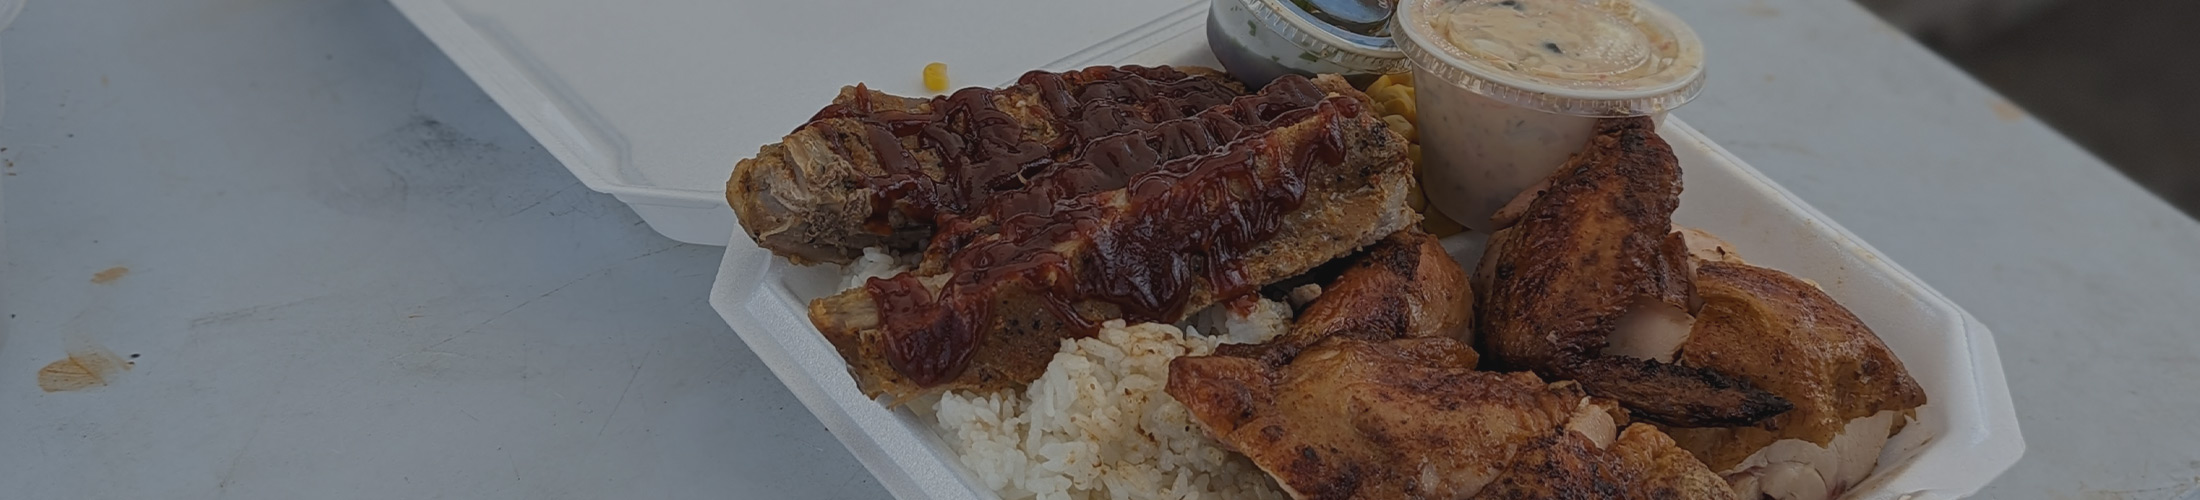 image of Mixed plate of Huli Huli Chicken and ribs from Diamond's Kitchen